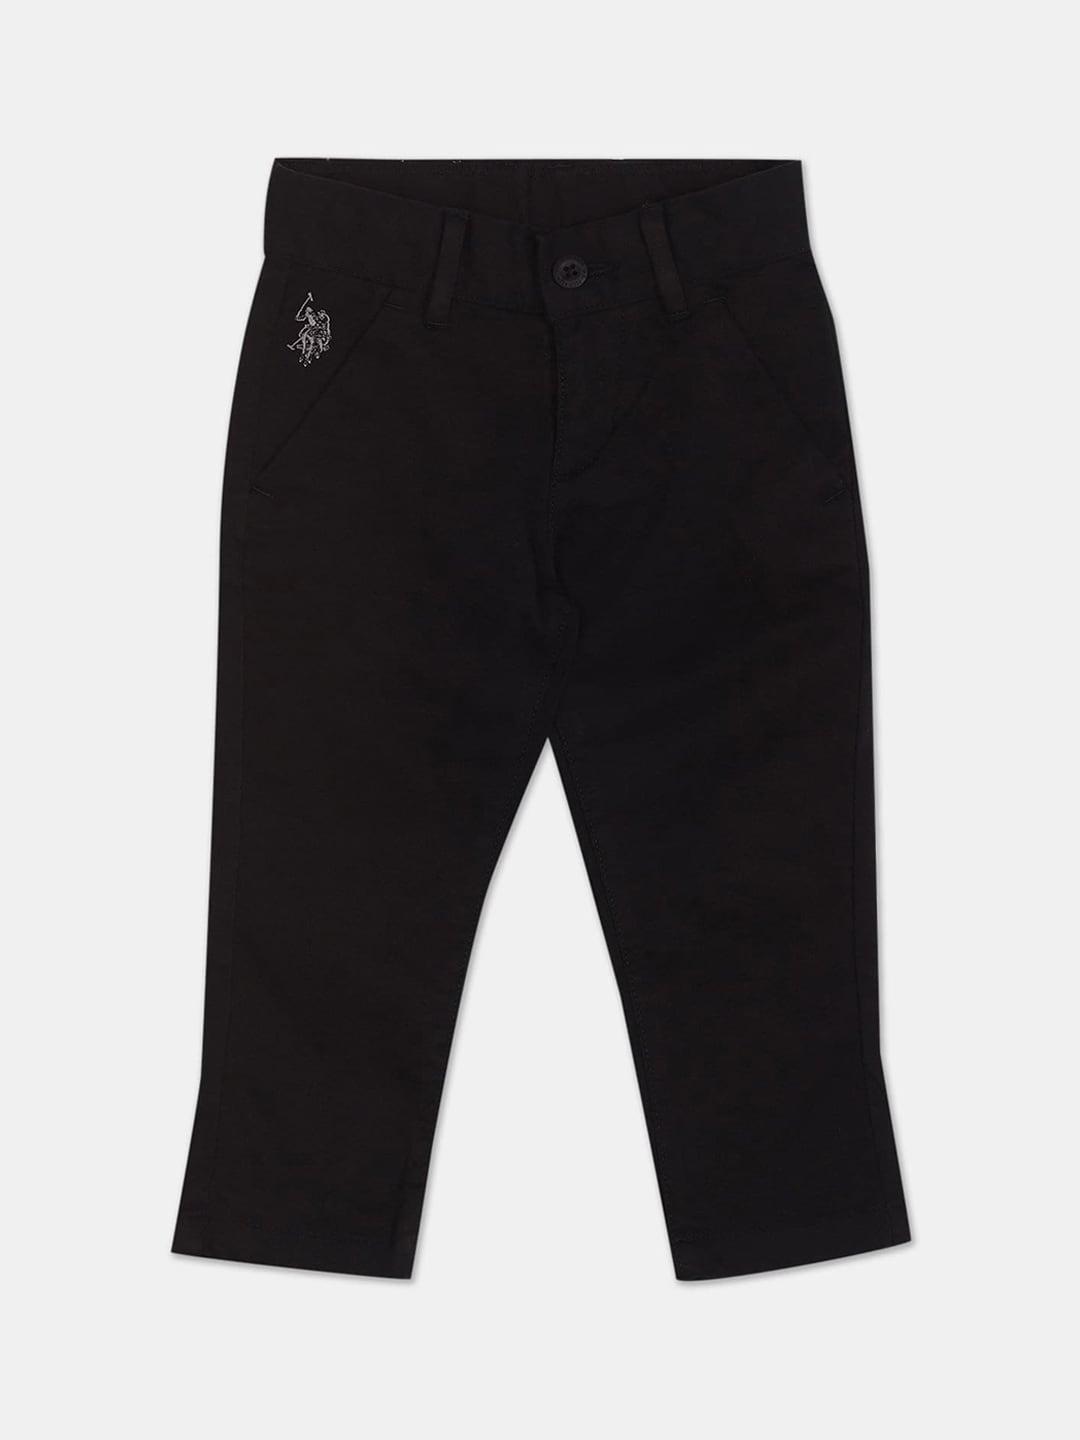 U.S. Polo Assn. Kids Boys Black Solid Trousers